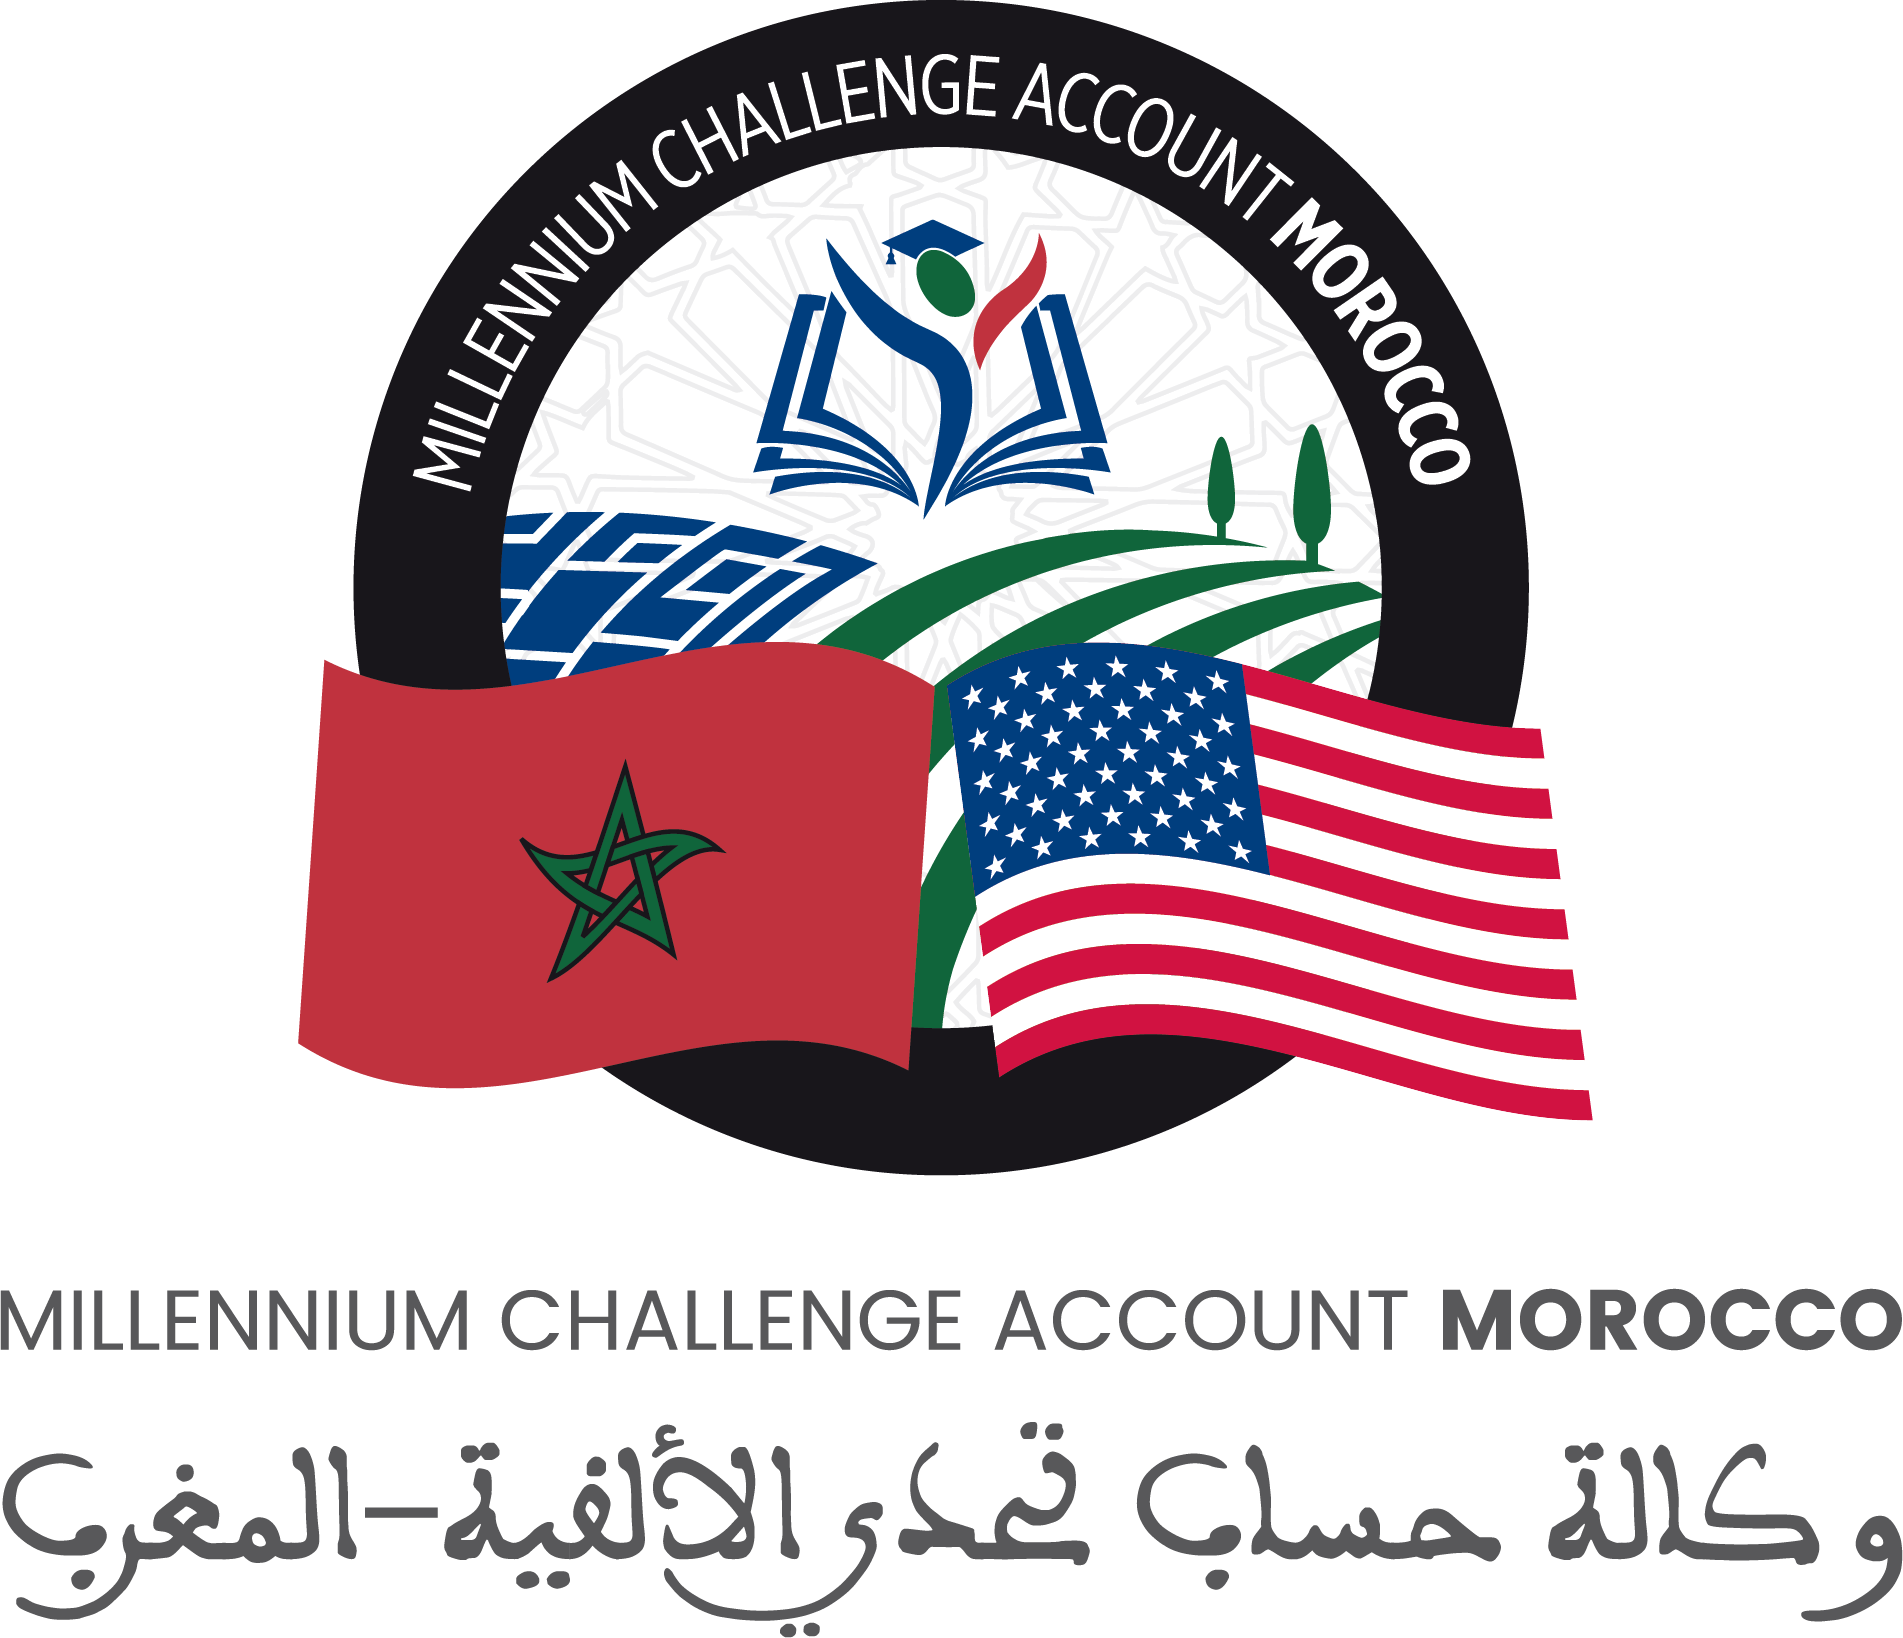 Millennium Challenge Account Morocco logo